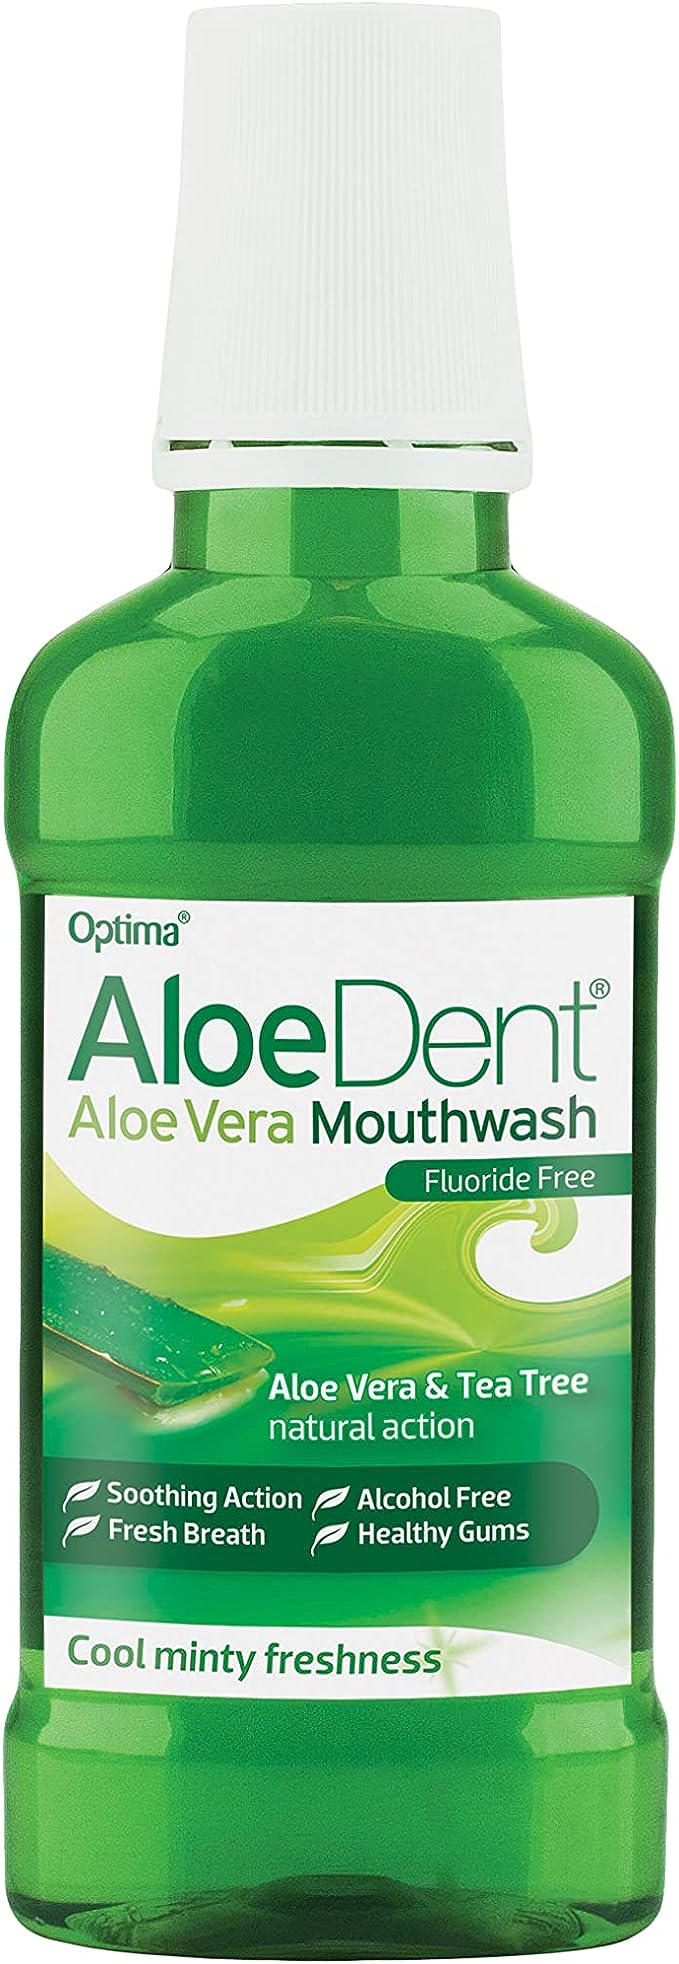 Optima Aloe Dent Fluoride Free Mouthwash 250ml RRP £4.99 CLEARANCE XL £3.99